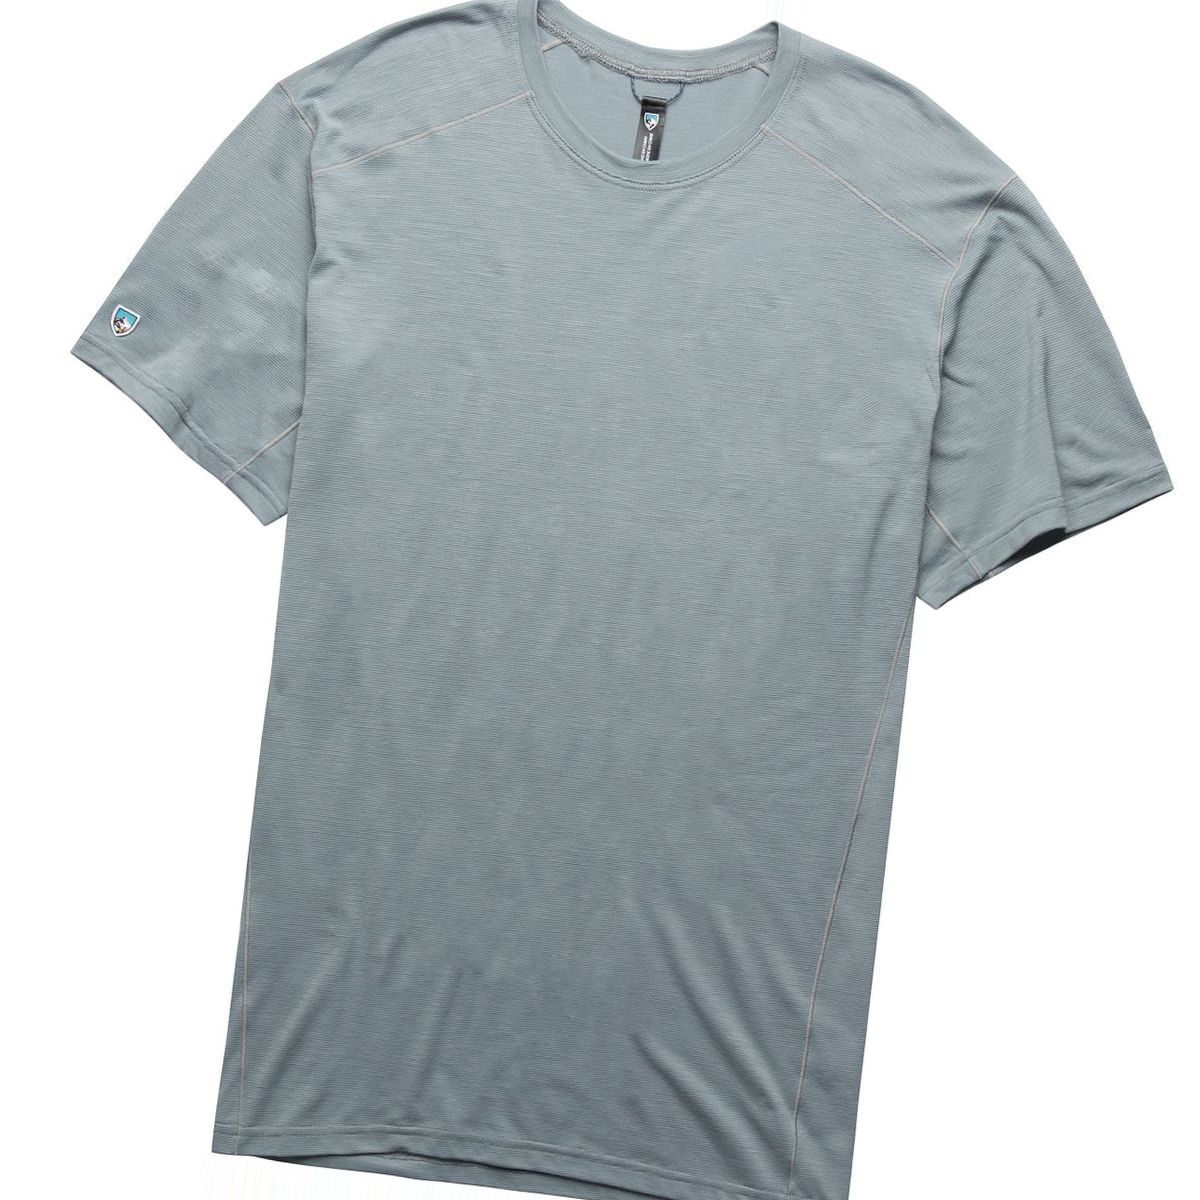 KUHL Valiant Short-Sleeve Shirt - Men's